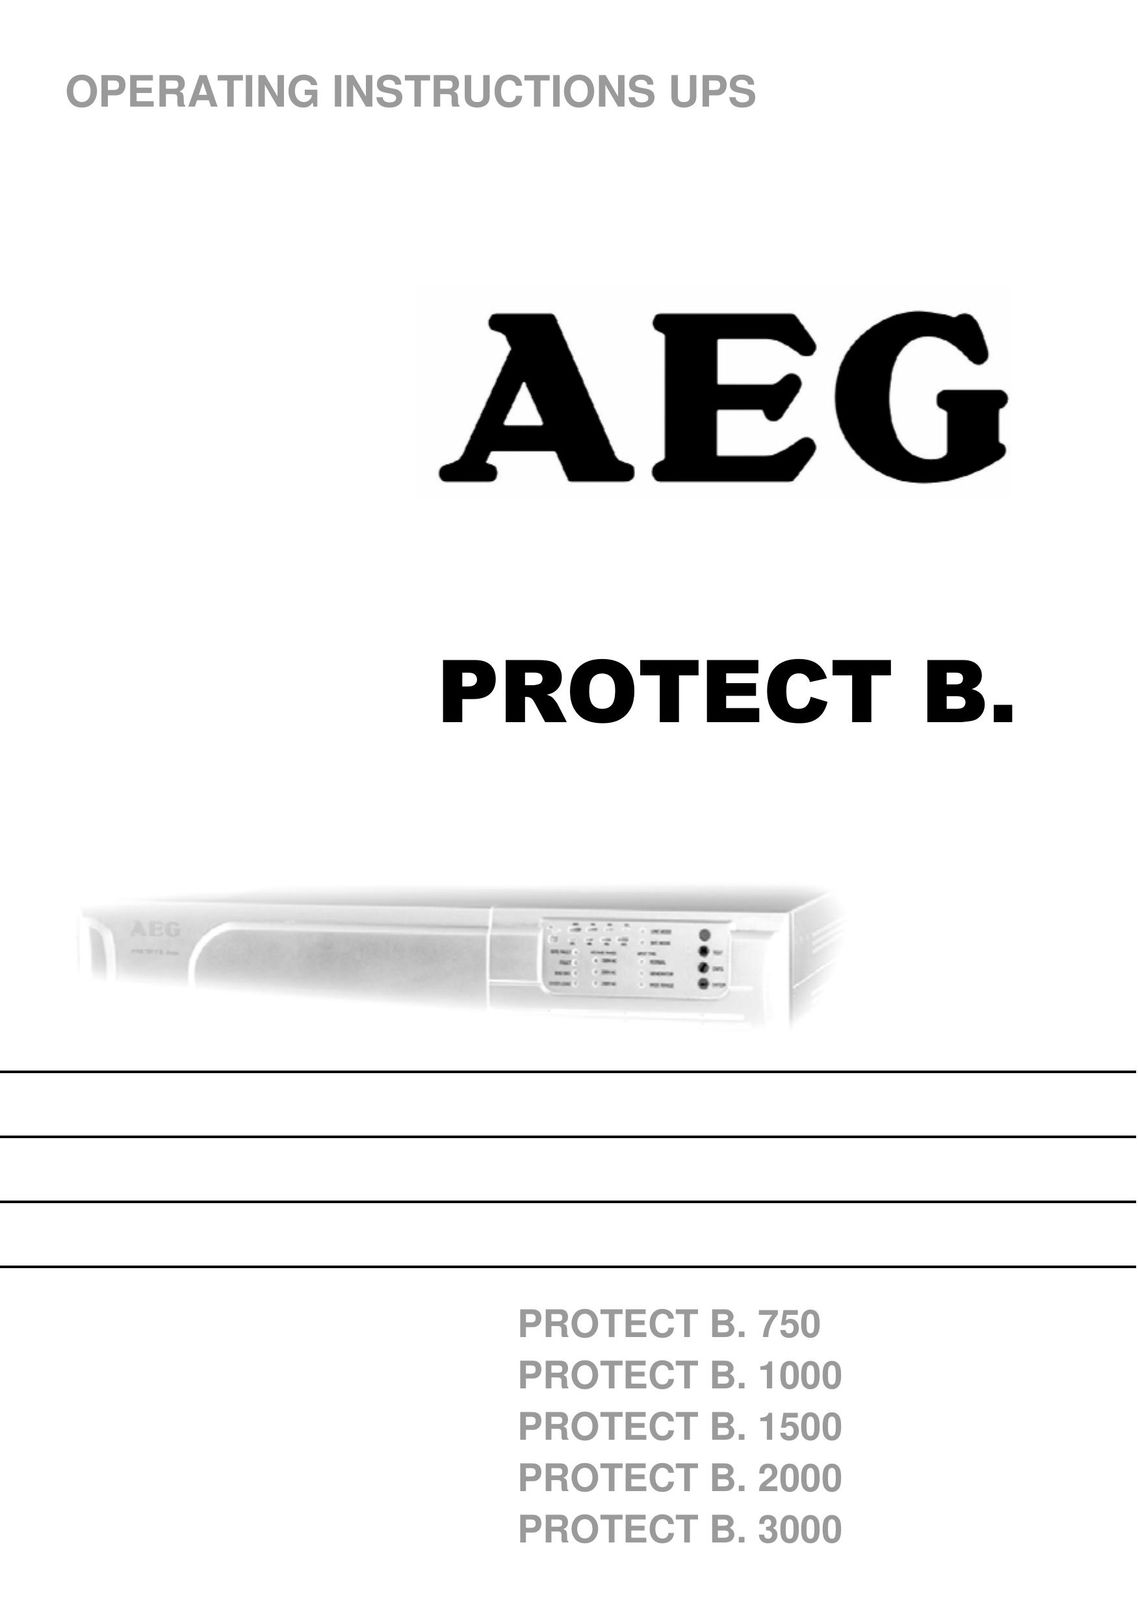 AEG PROTECT B. 1000 Power Supply User Manual